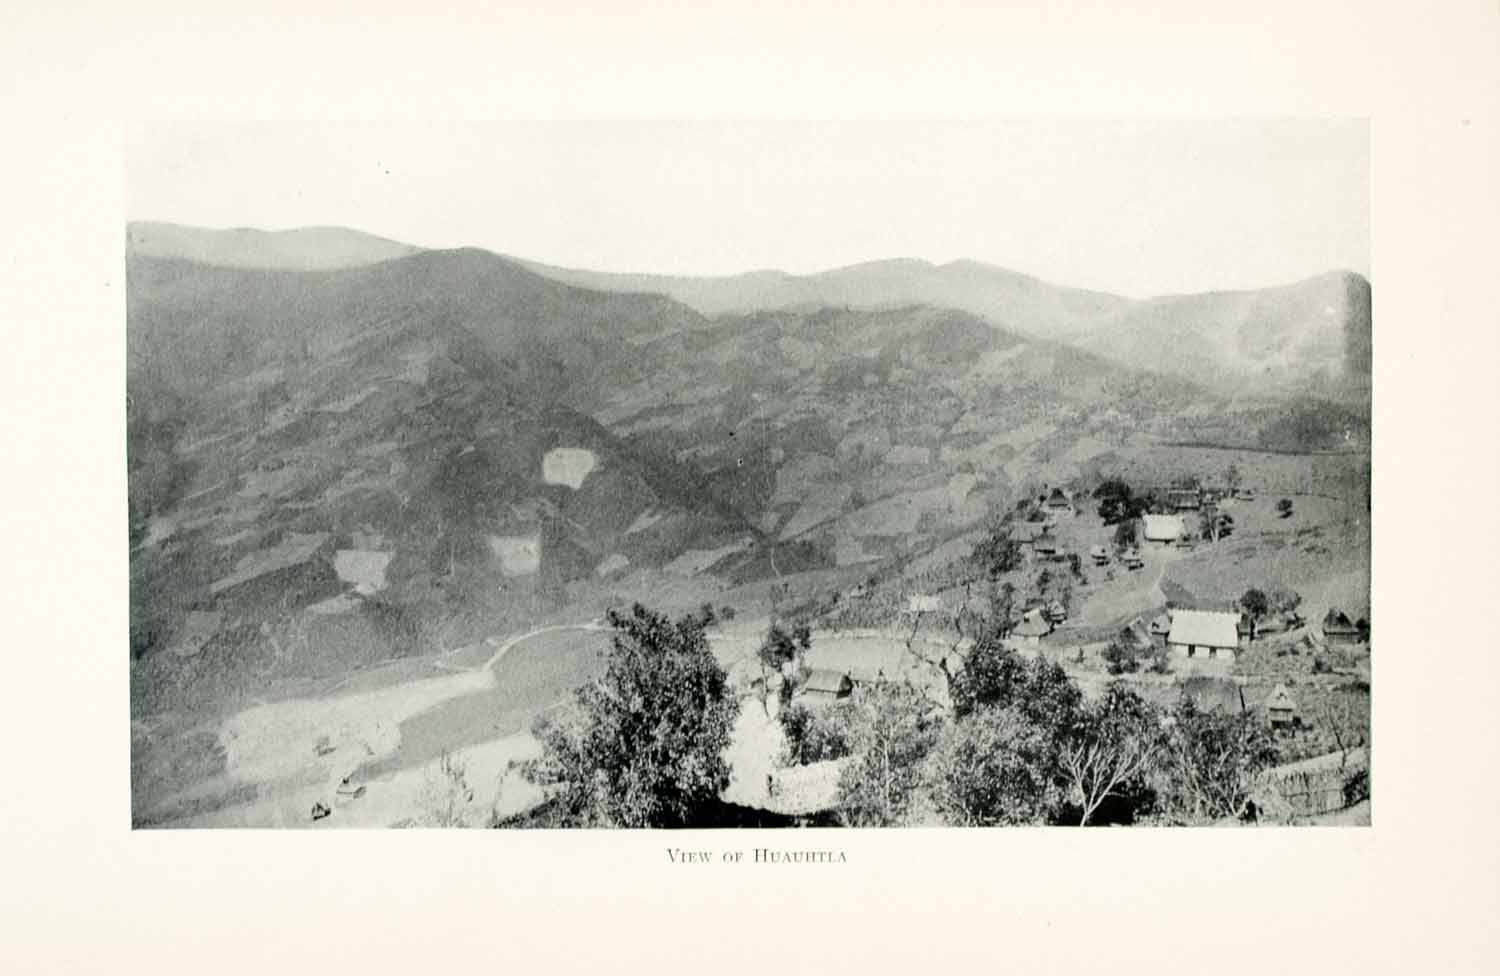 1908 Print View Huauhtla Mexico Landscape Mountains Houses Cityscape XGMA4